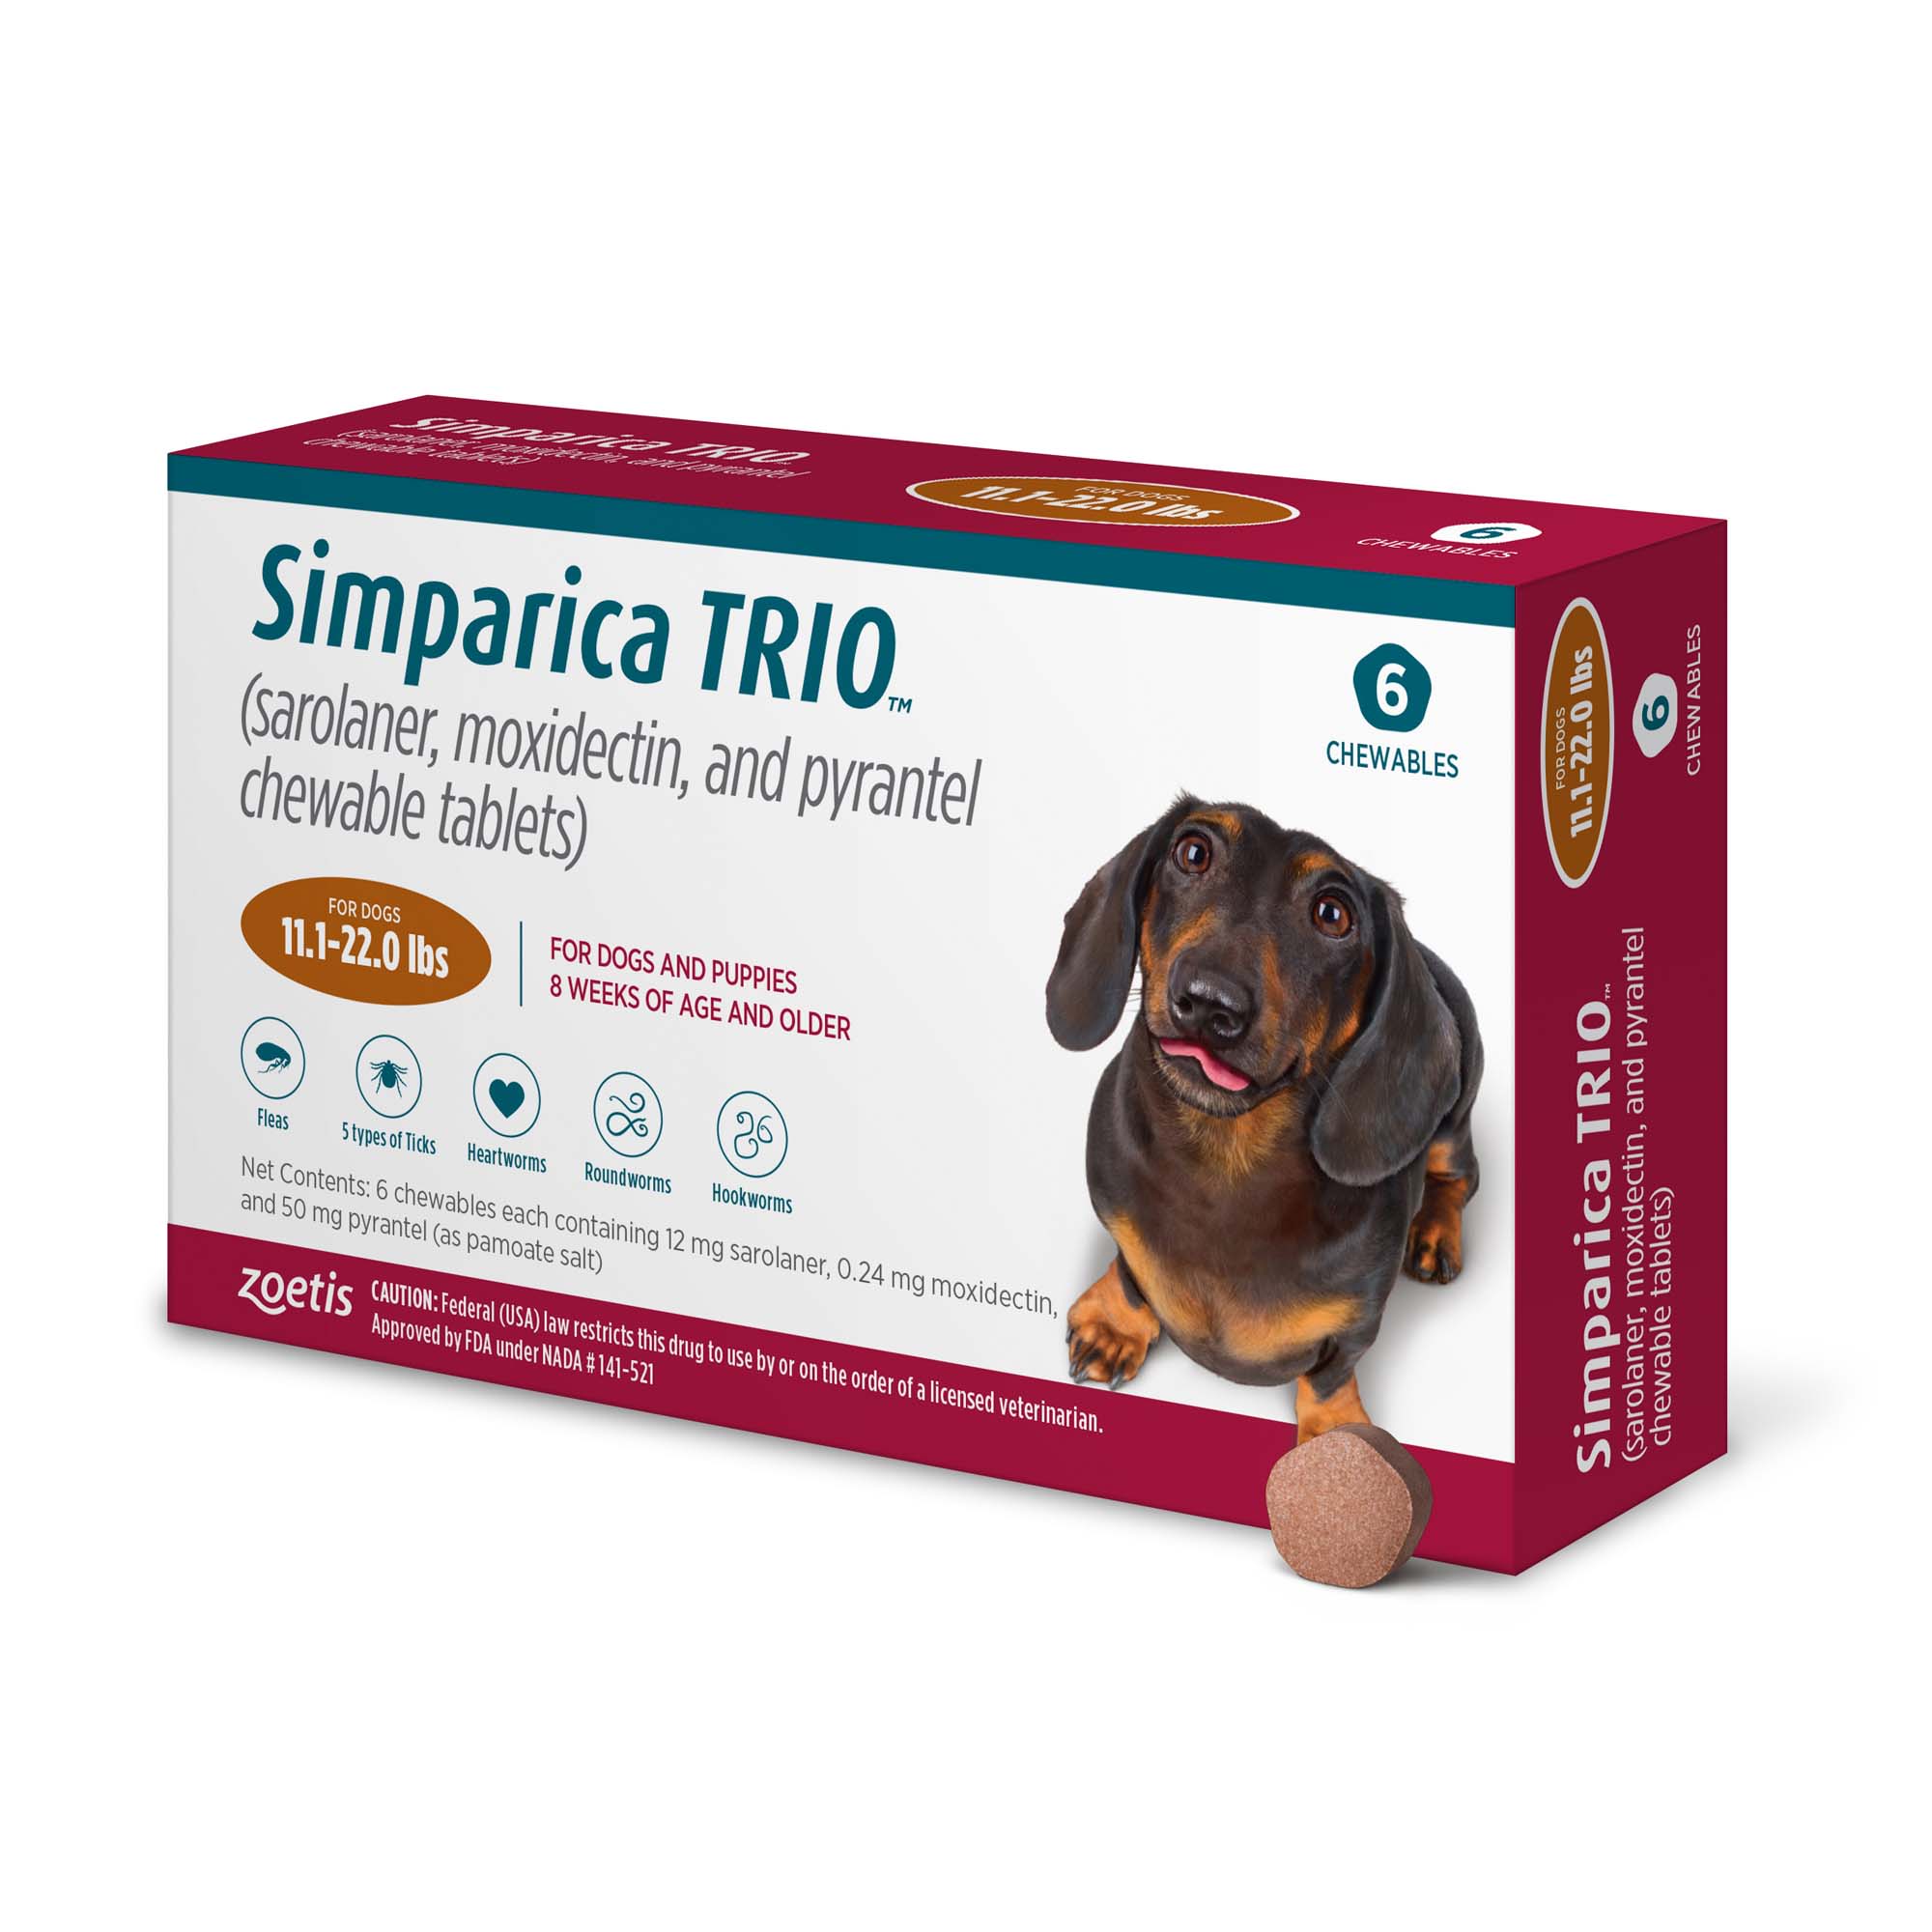 simparica-trio-dogs-month-supply-petco-tunersread